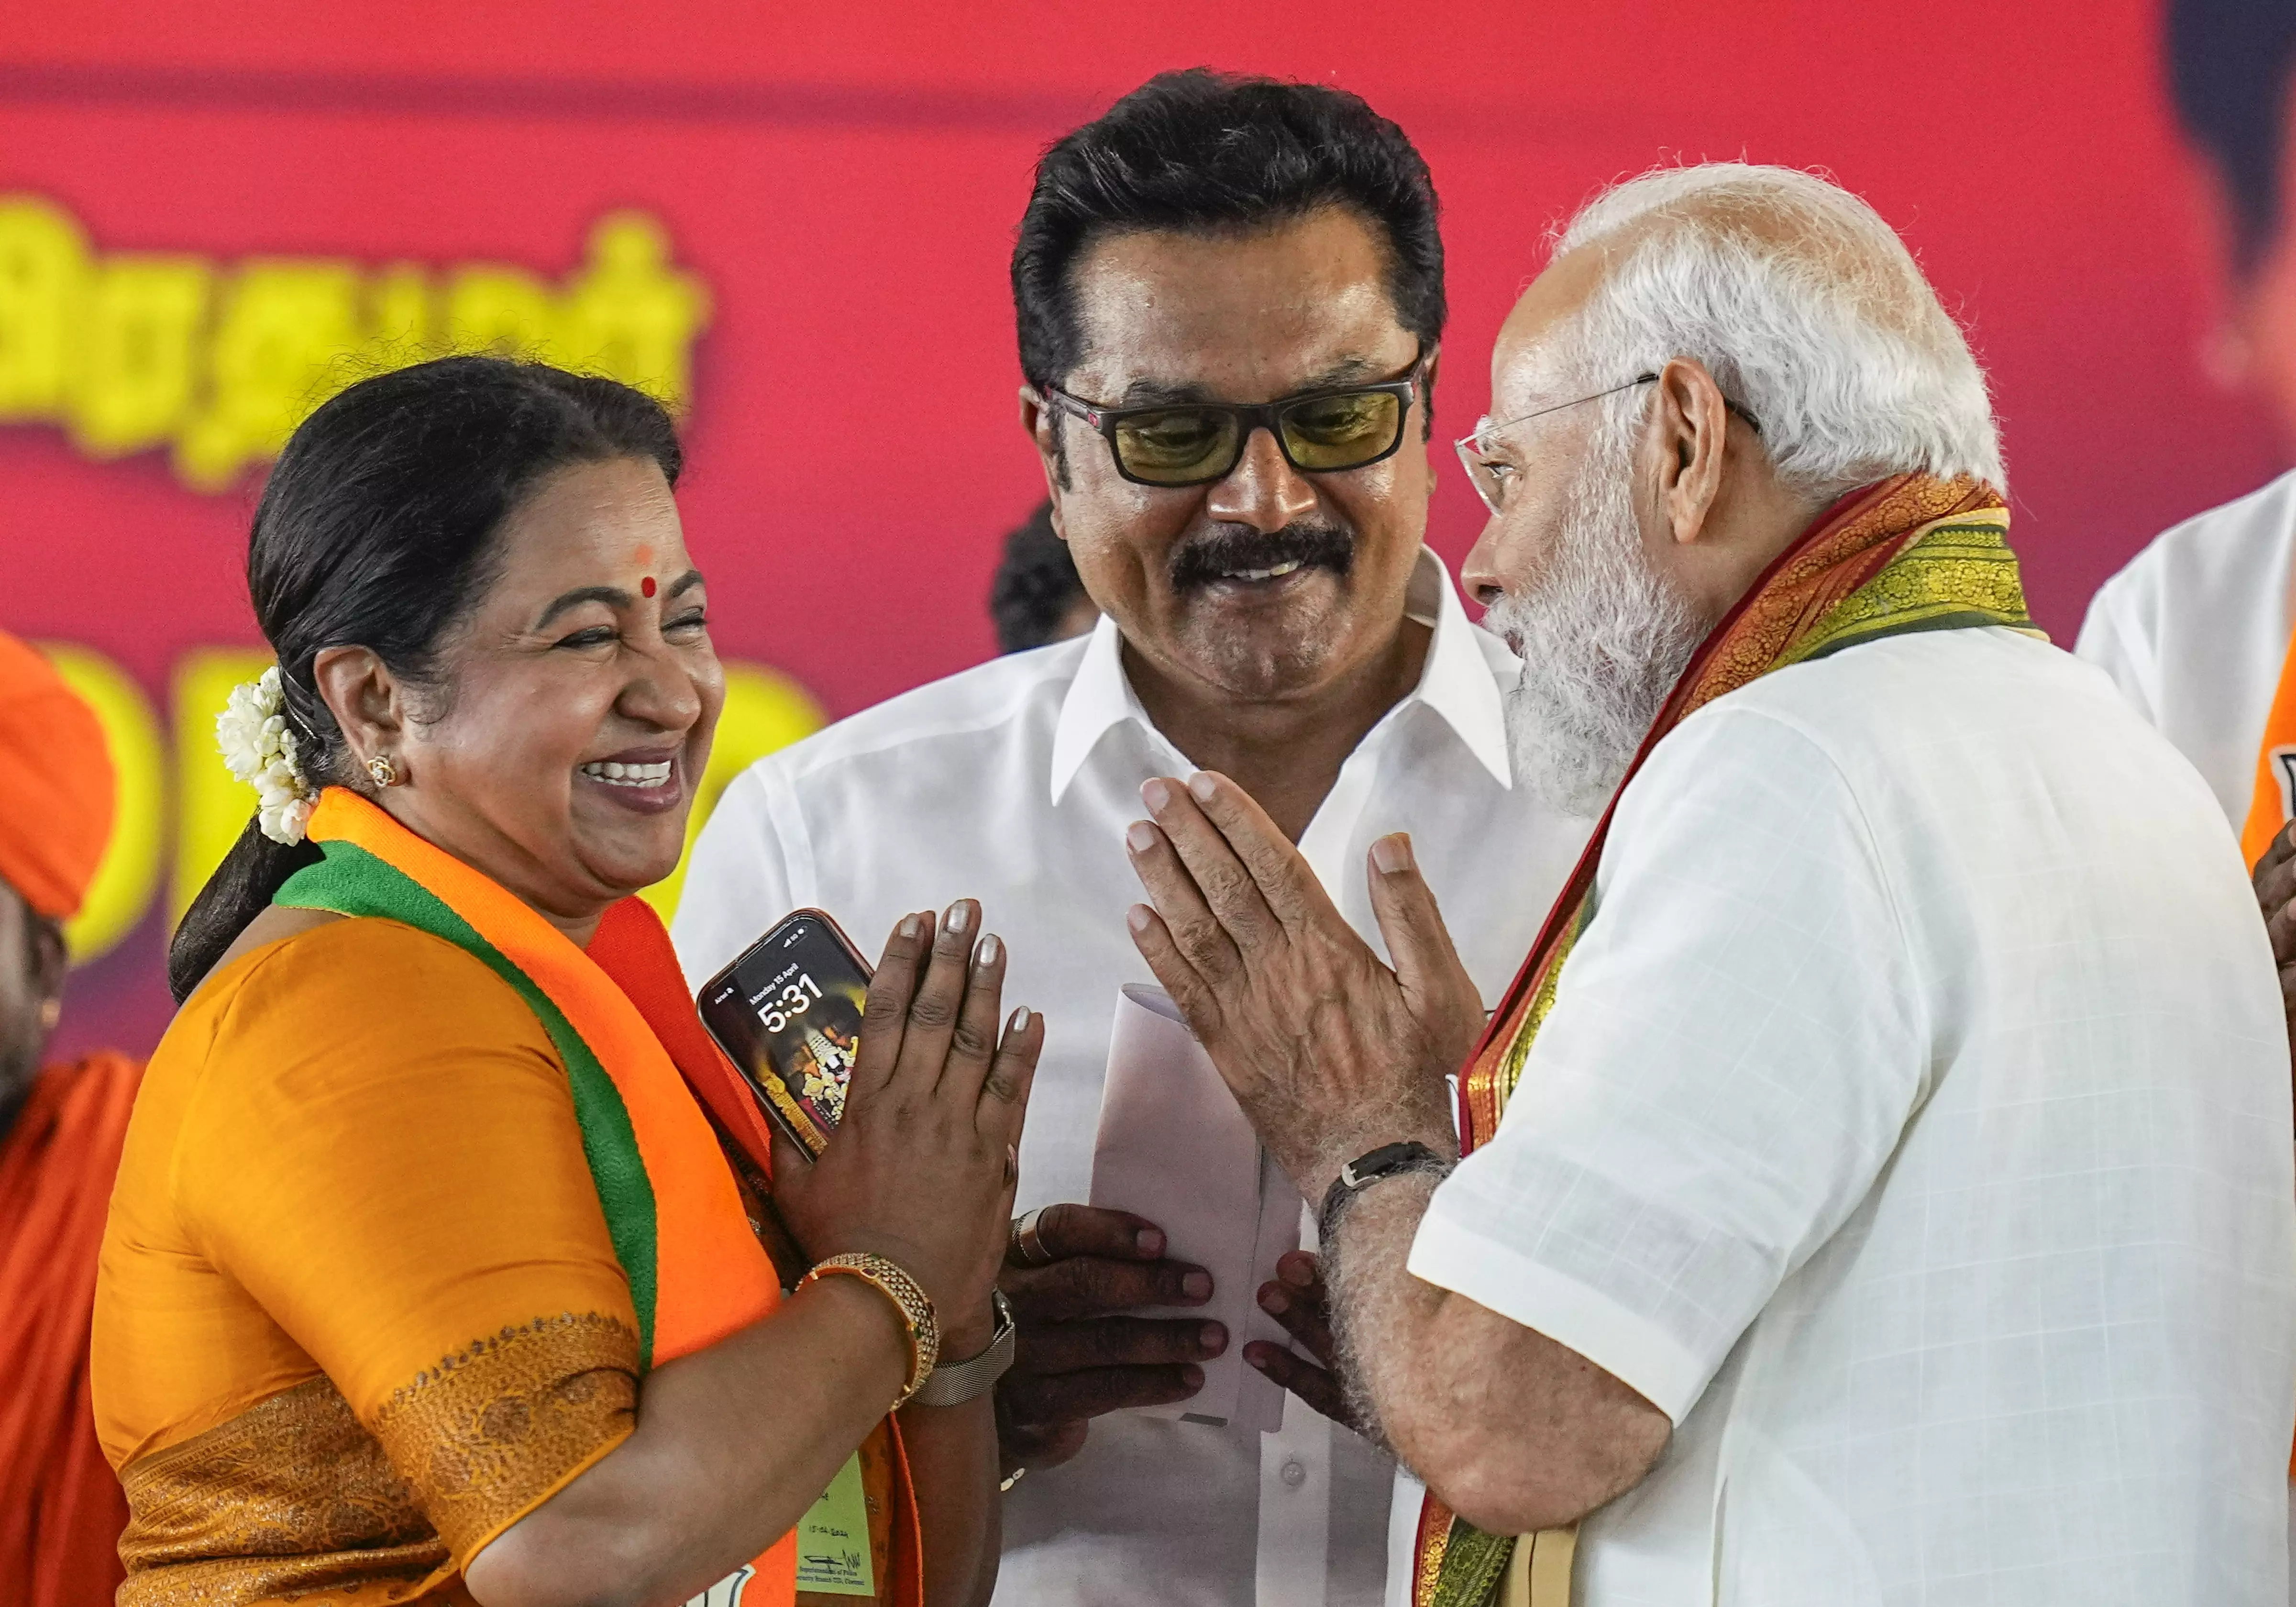 Congress, DMKs sin on Katchatheevu hidden for 4 decades till BJP brought it to light: Modi